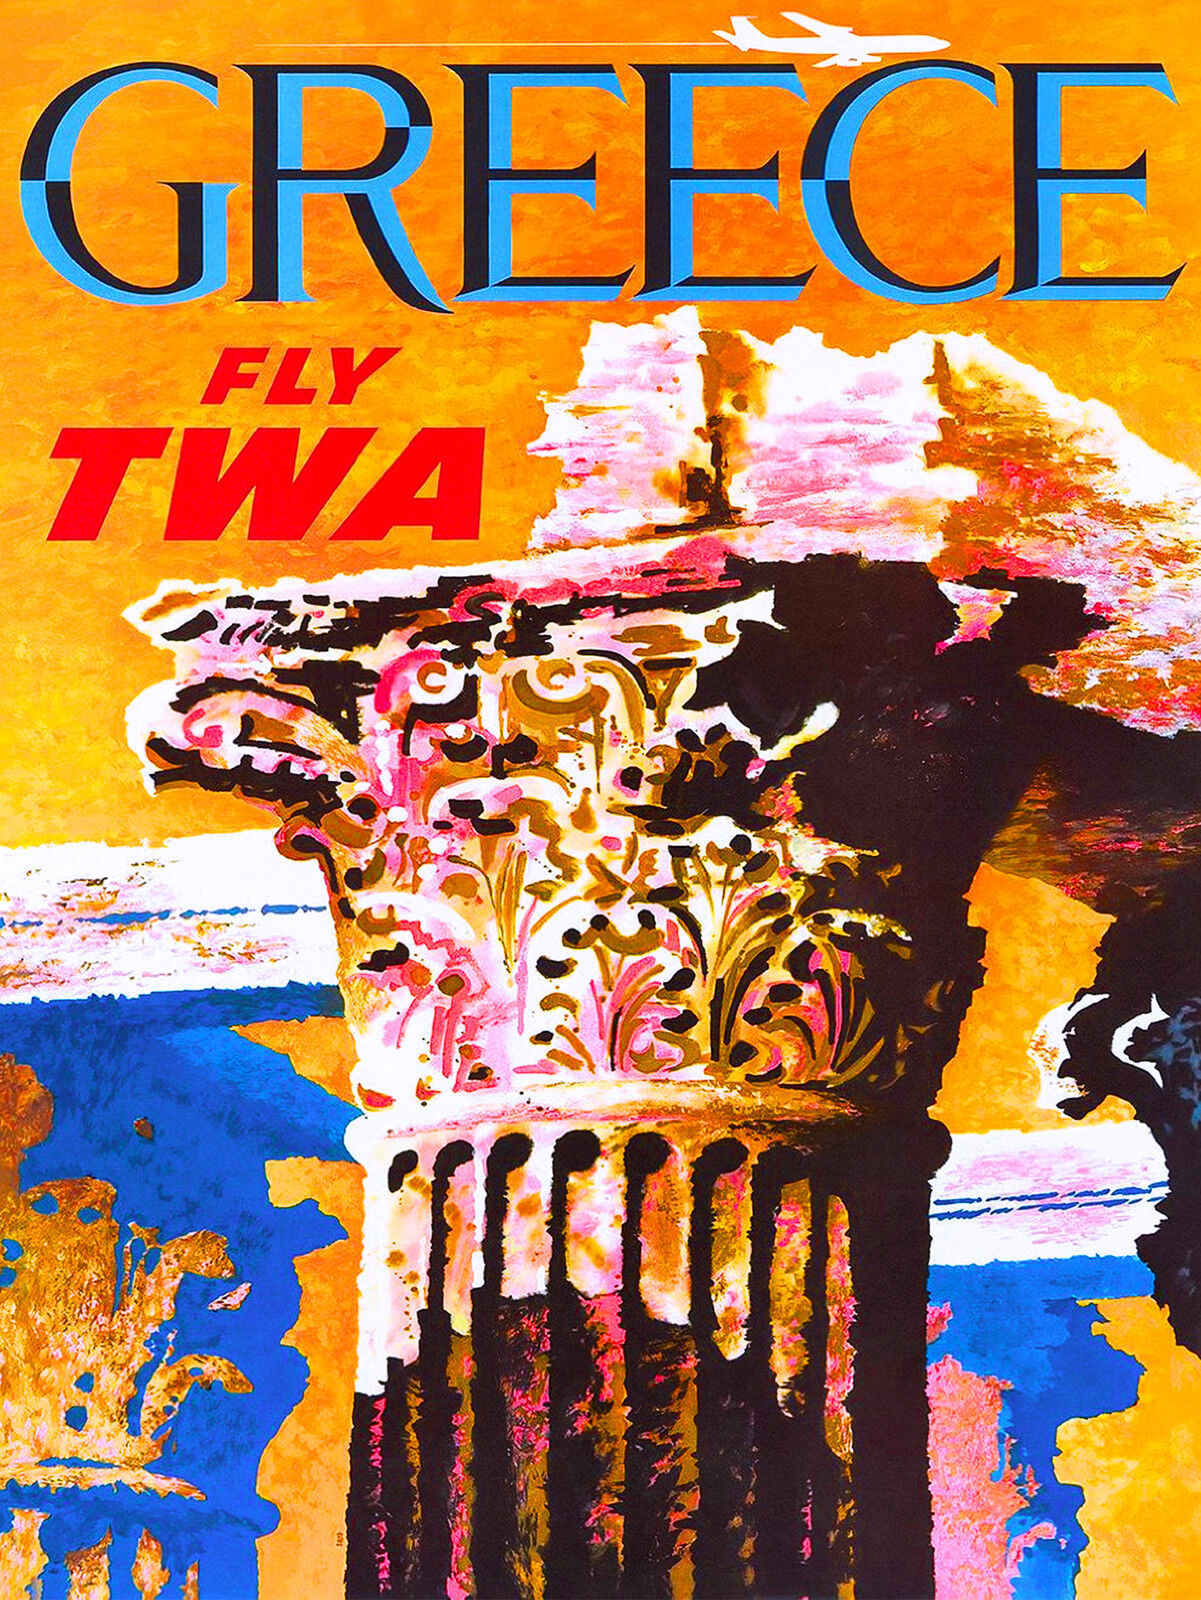 Greece Greek Ruins Europe European Vintage Travel Advertisement Art Poster 